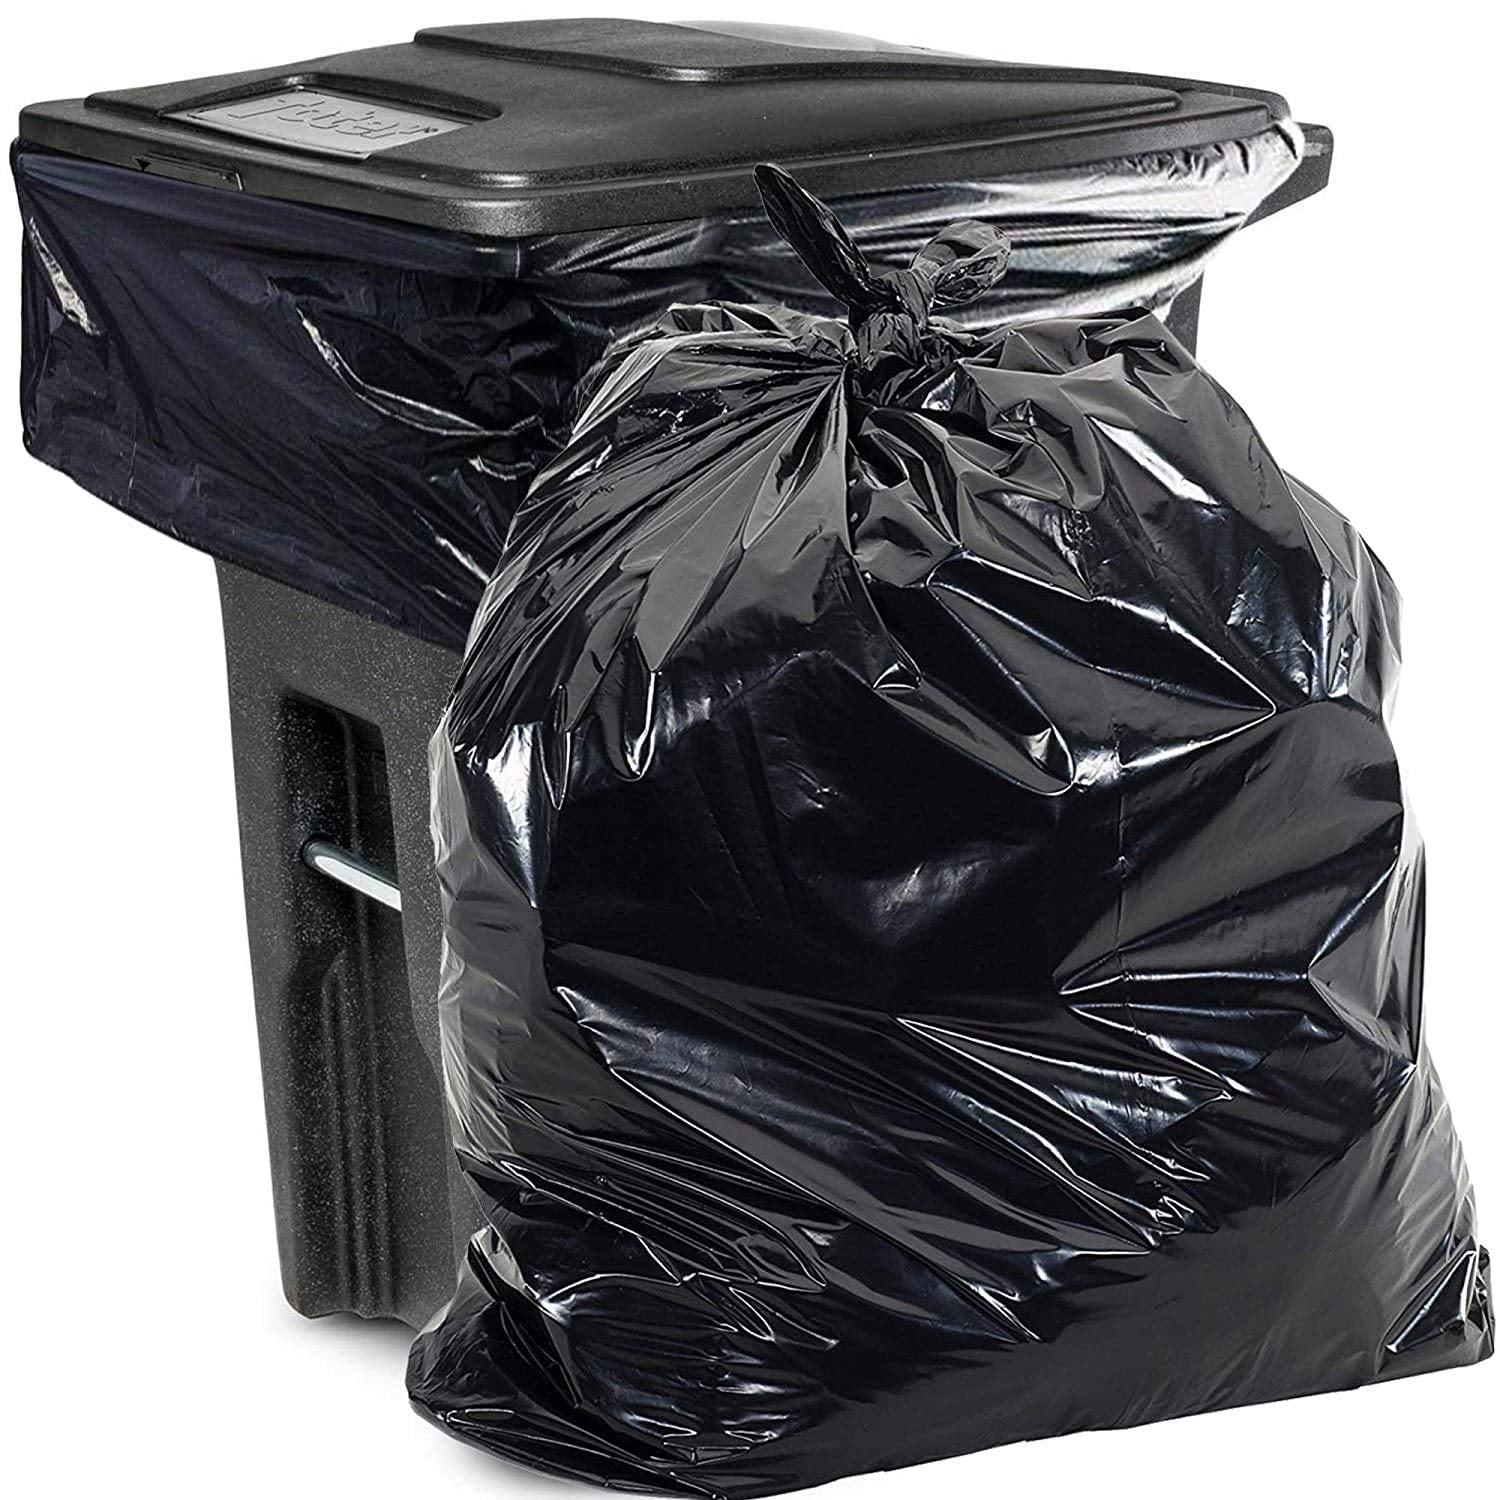 Details about   Aluf Plastics 33 Gallon Trash Bags Commercial 250 Pack Source Reduction Series 